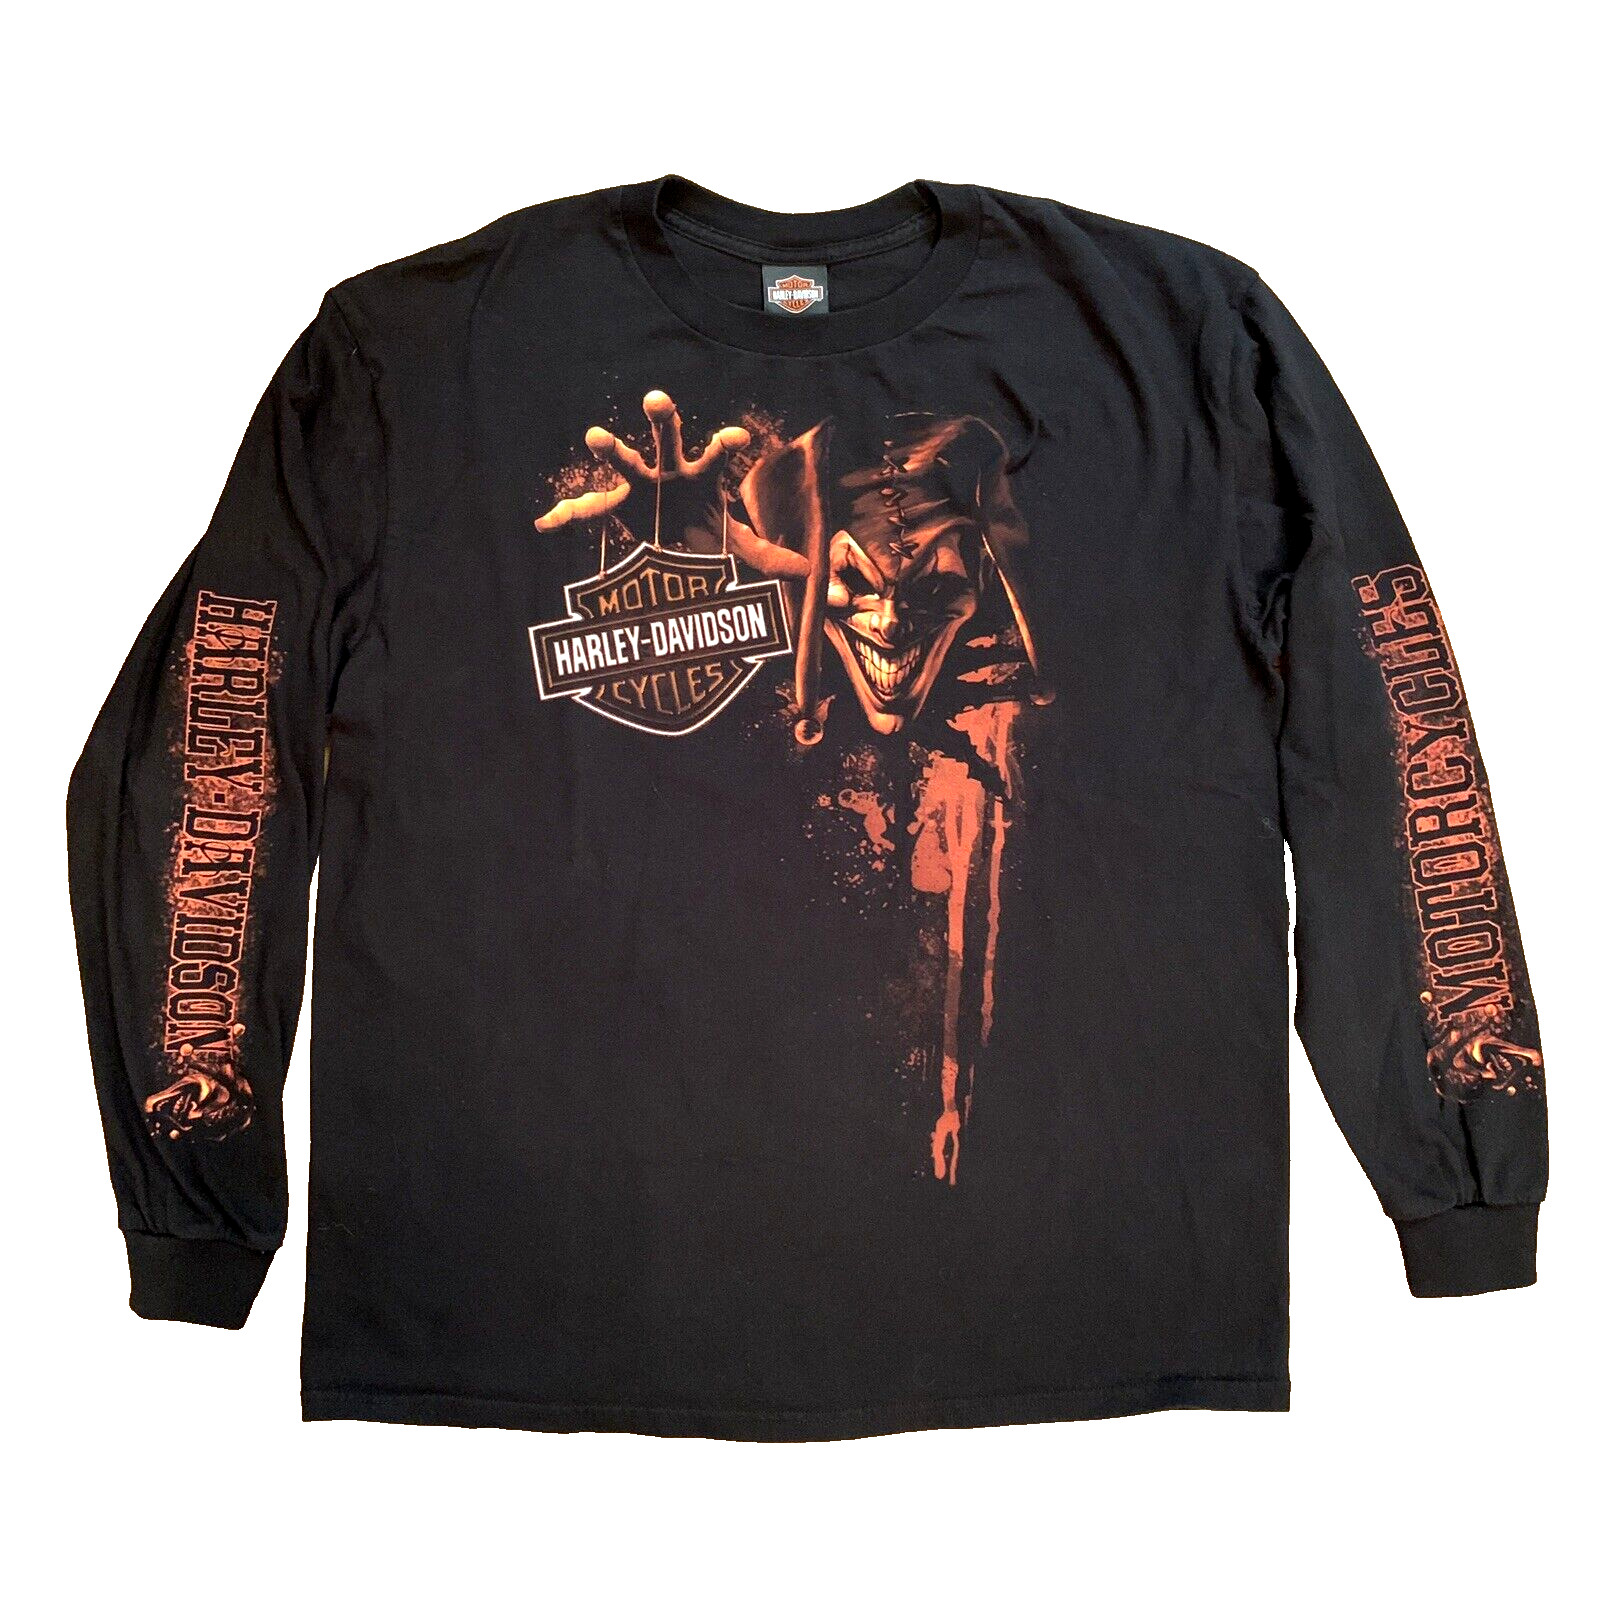 Harley Davidson Joker Flames T-Shirt 2-Sided Motorcycle Biker Long Sleeve Sz XL